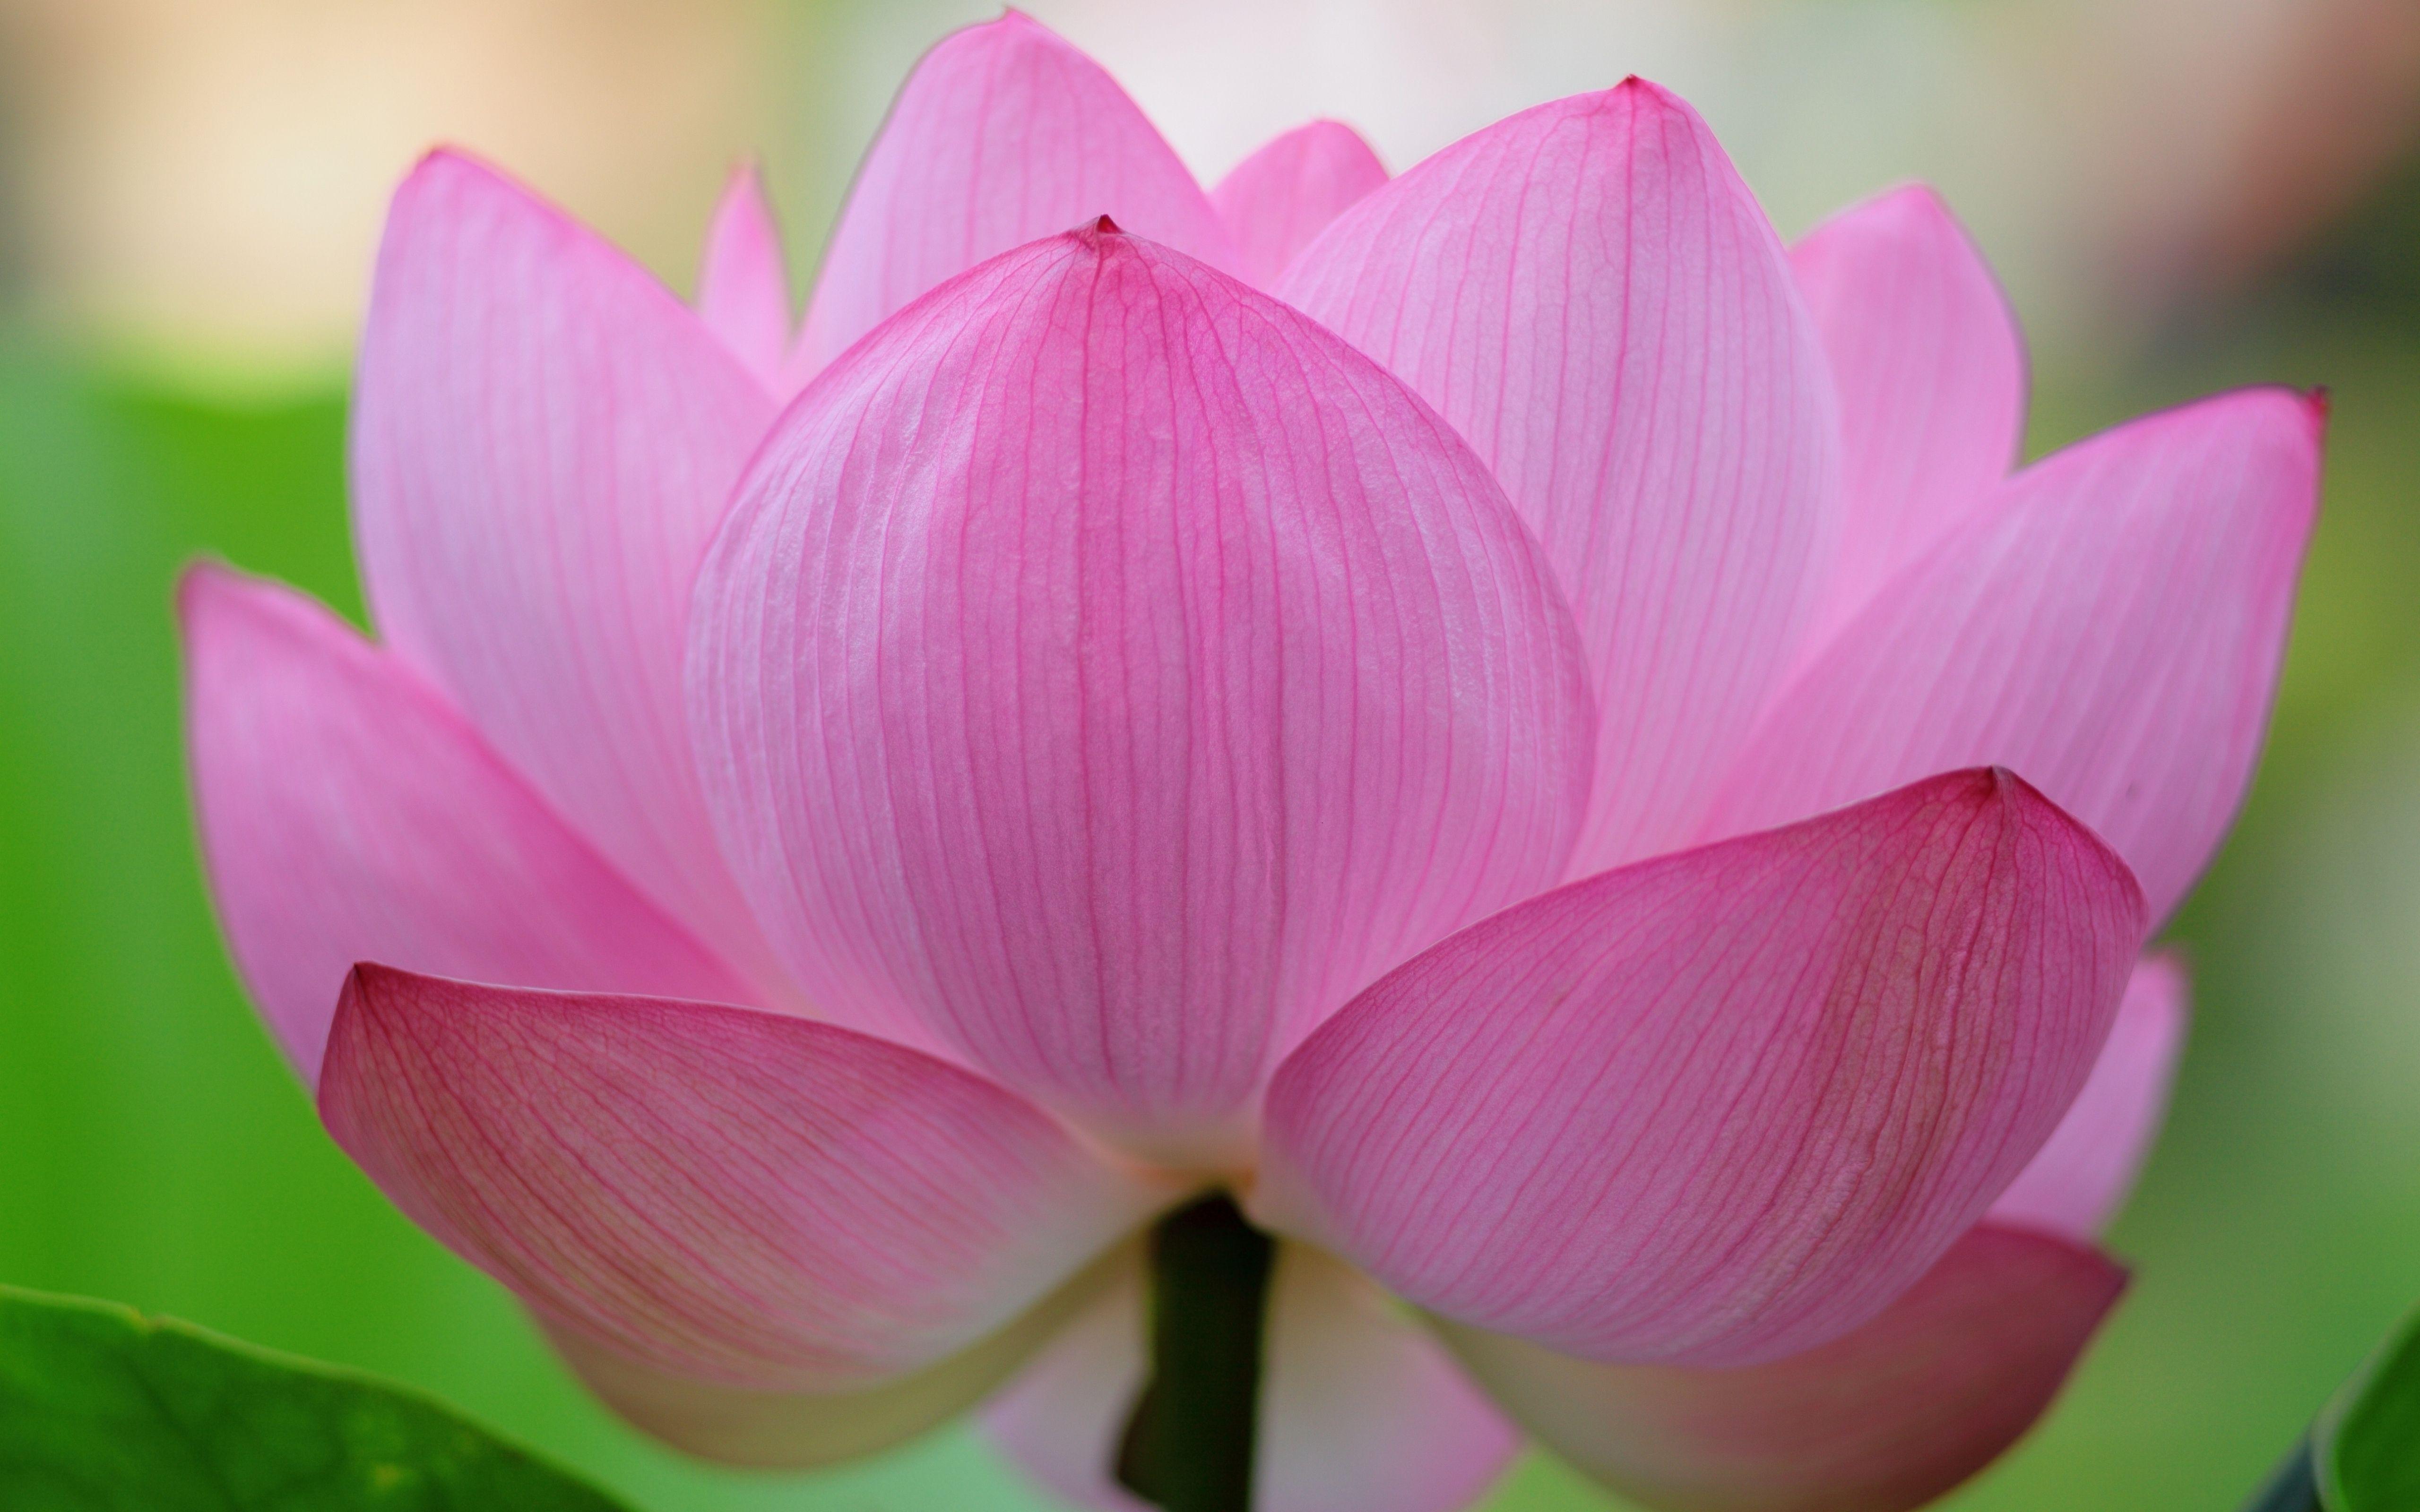 Pink Lotus Flower Desktop Background Wallpaper Free Download. Lotus flower wallpaper, HD flower wallpaper, Best flower wallpaper